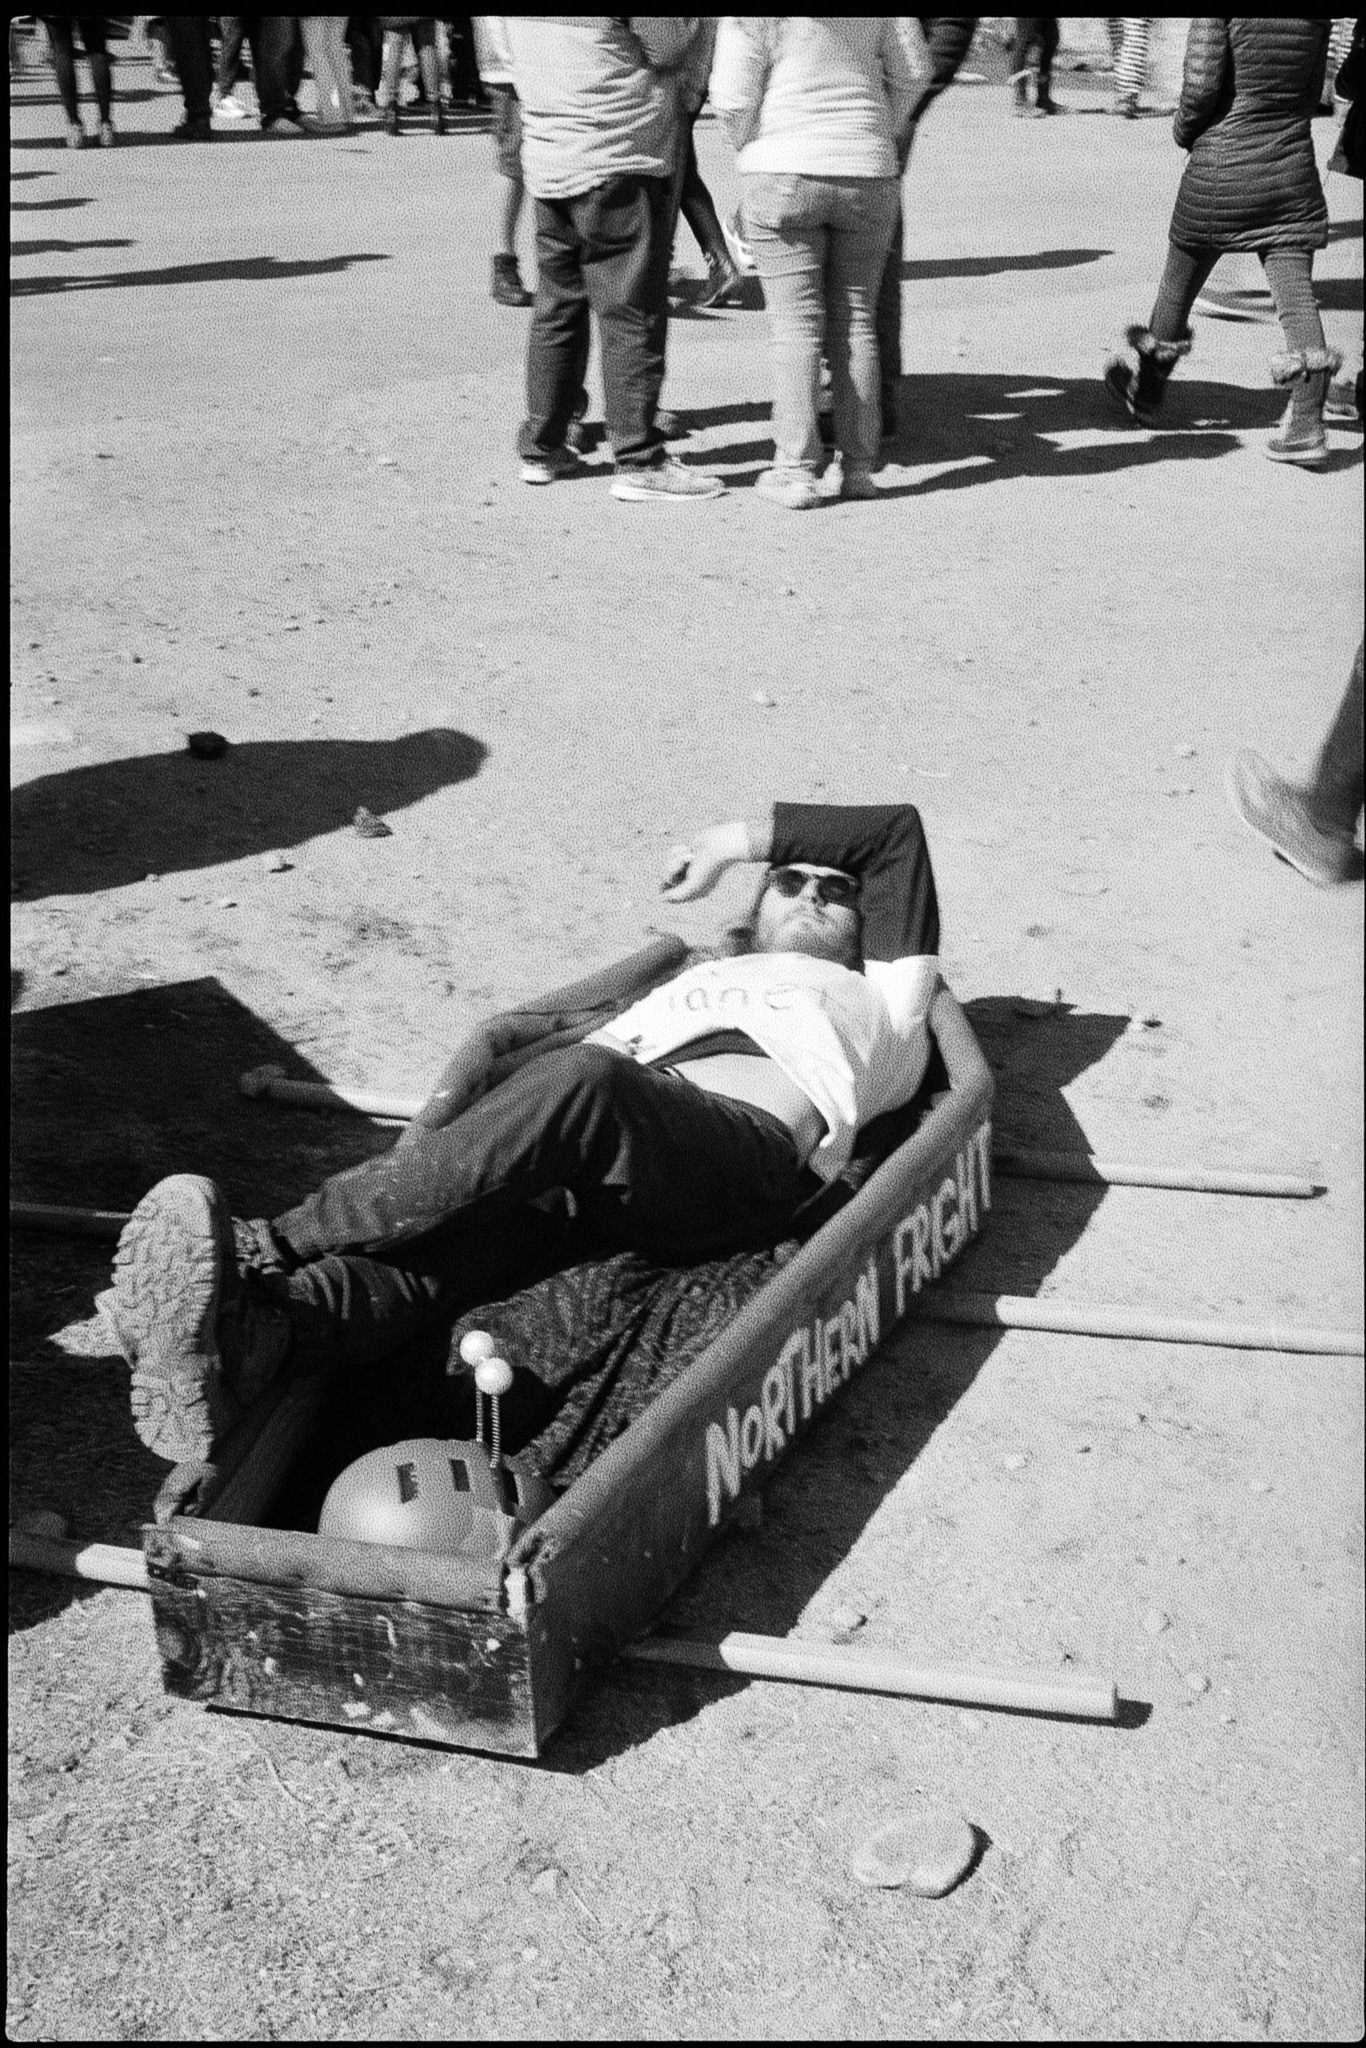 Man in a Coffin at Frozen Dead Guy Days